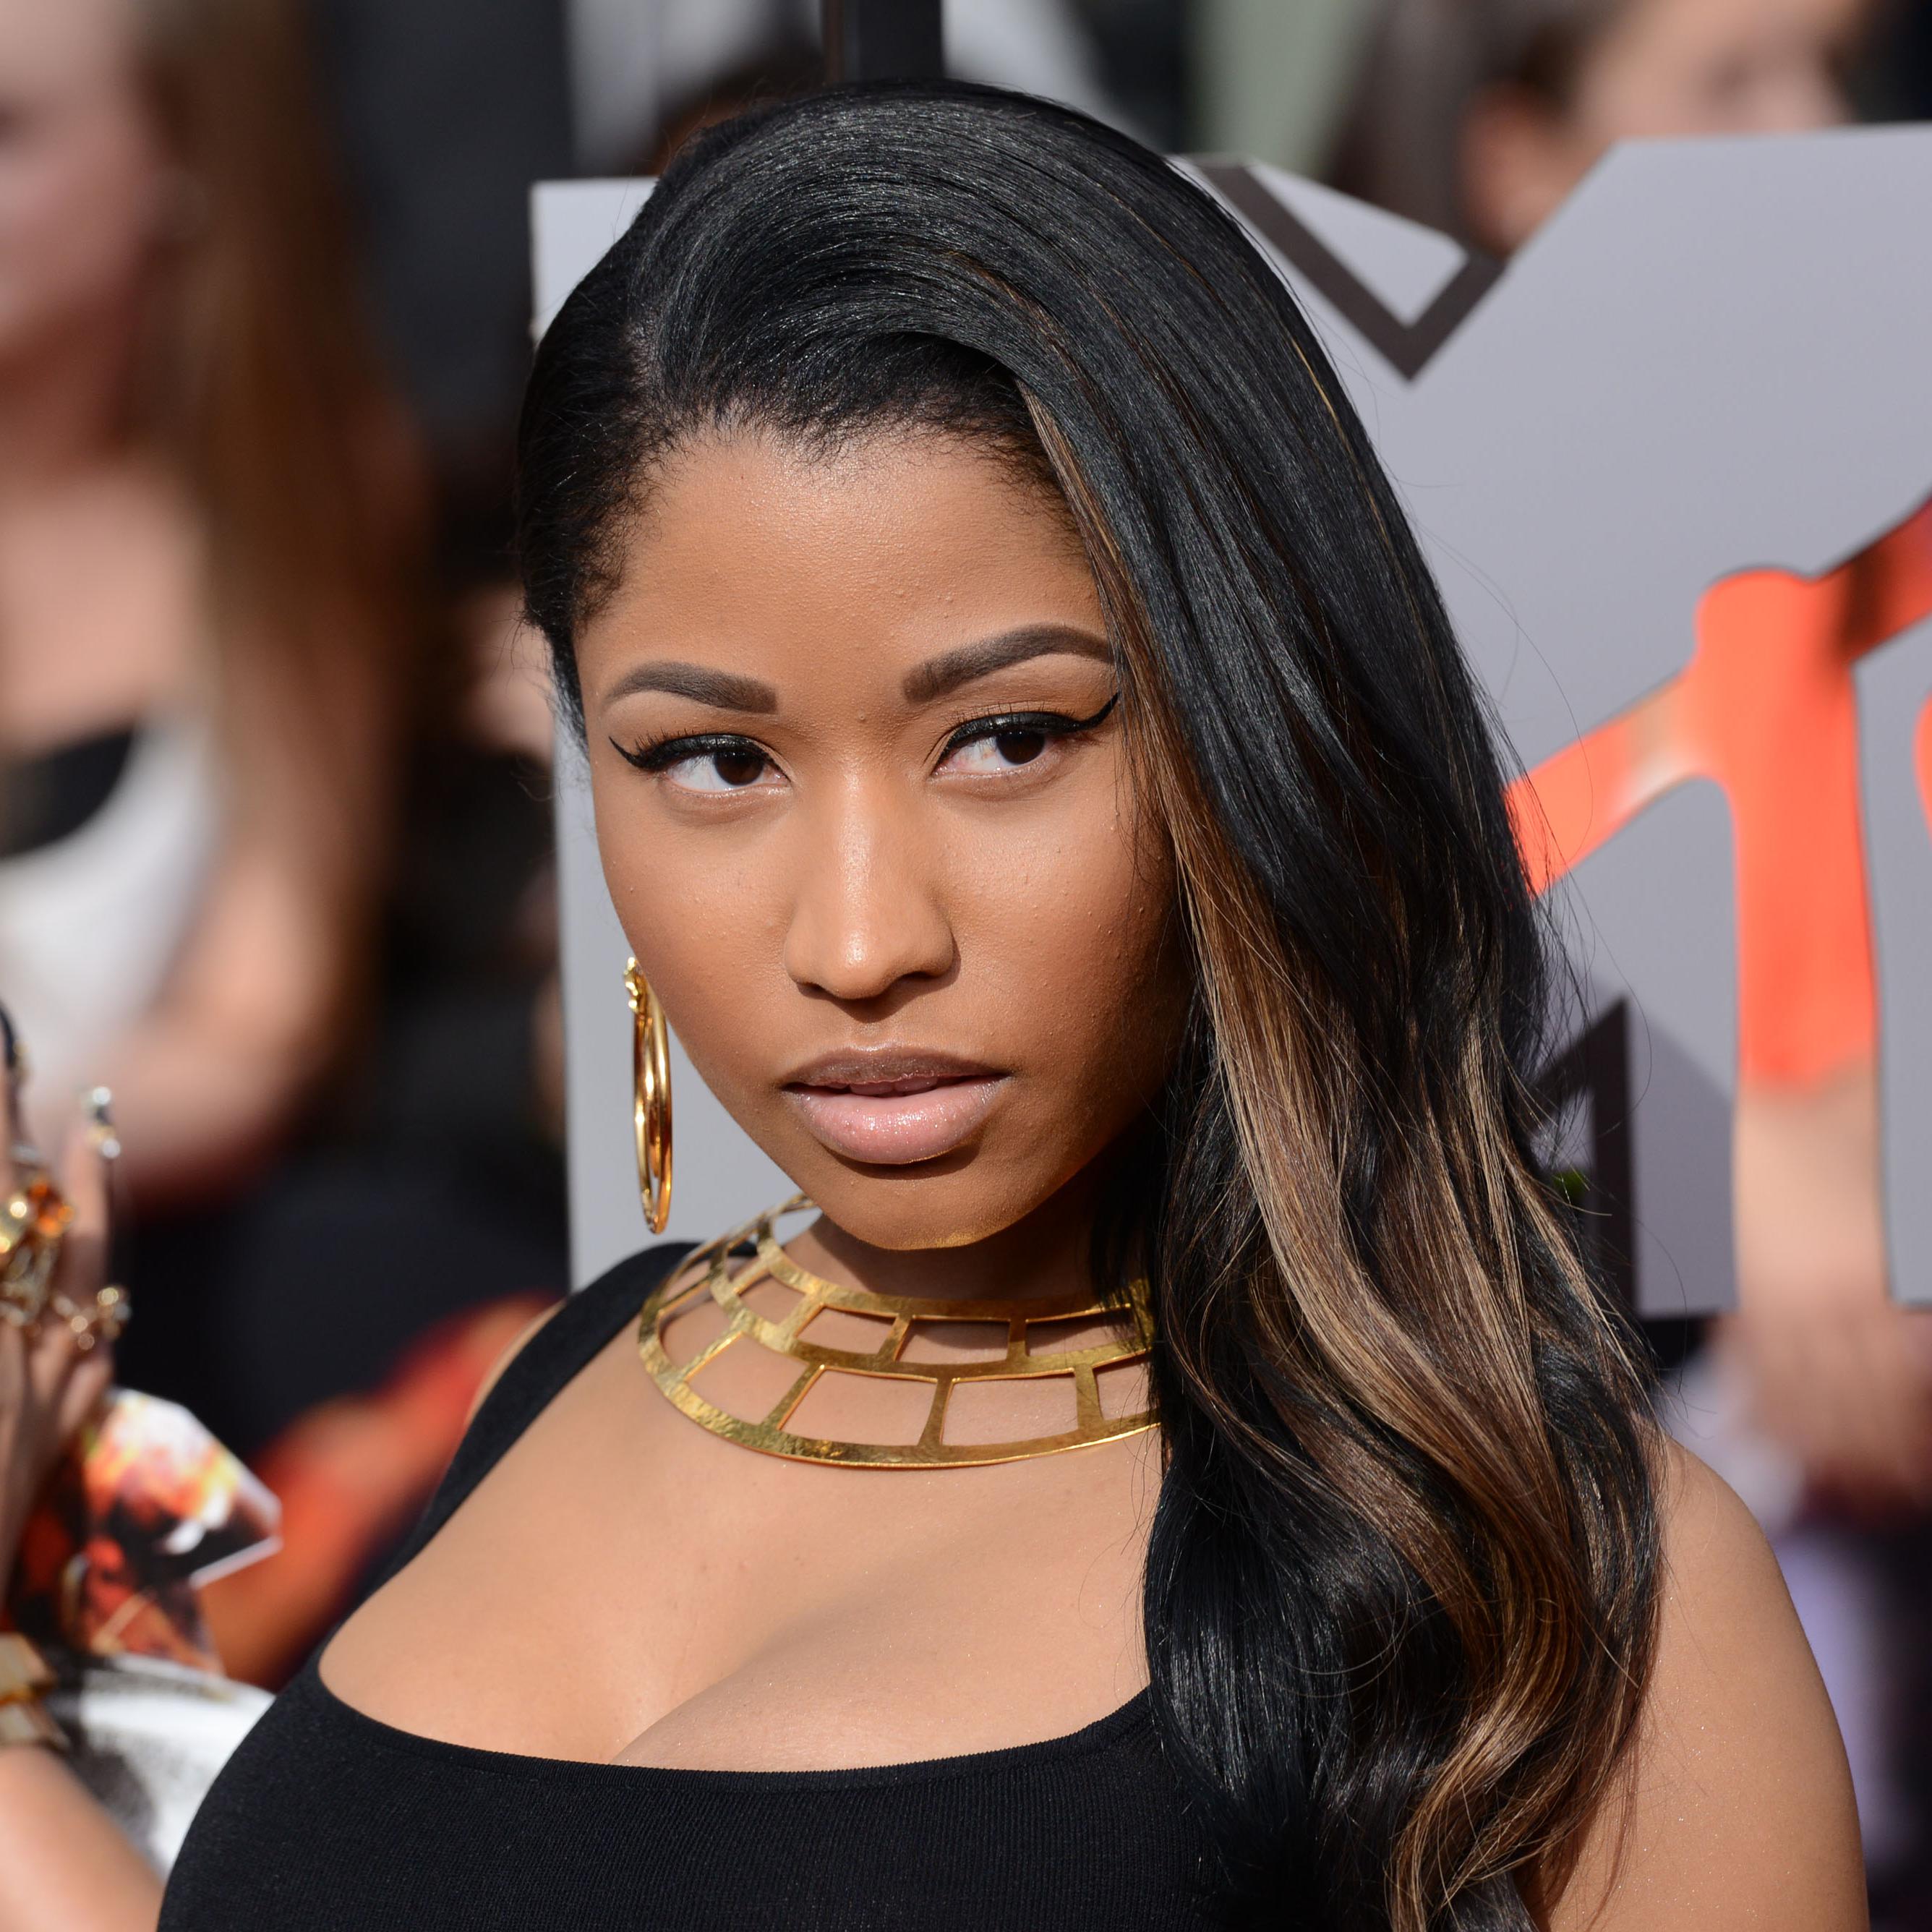 Nicki Minaj aux BET Awards 2014 : " J’ai failli mourir " - Elle 